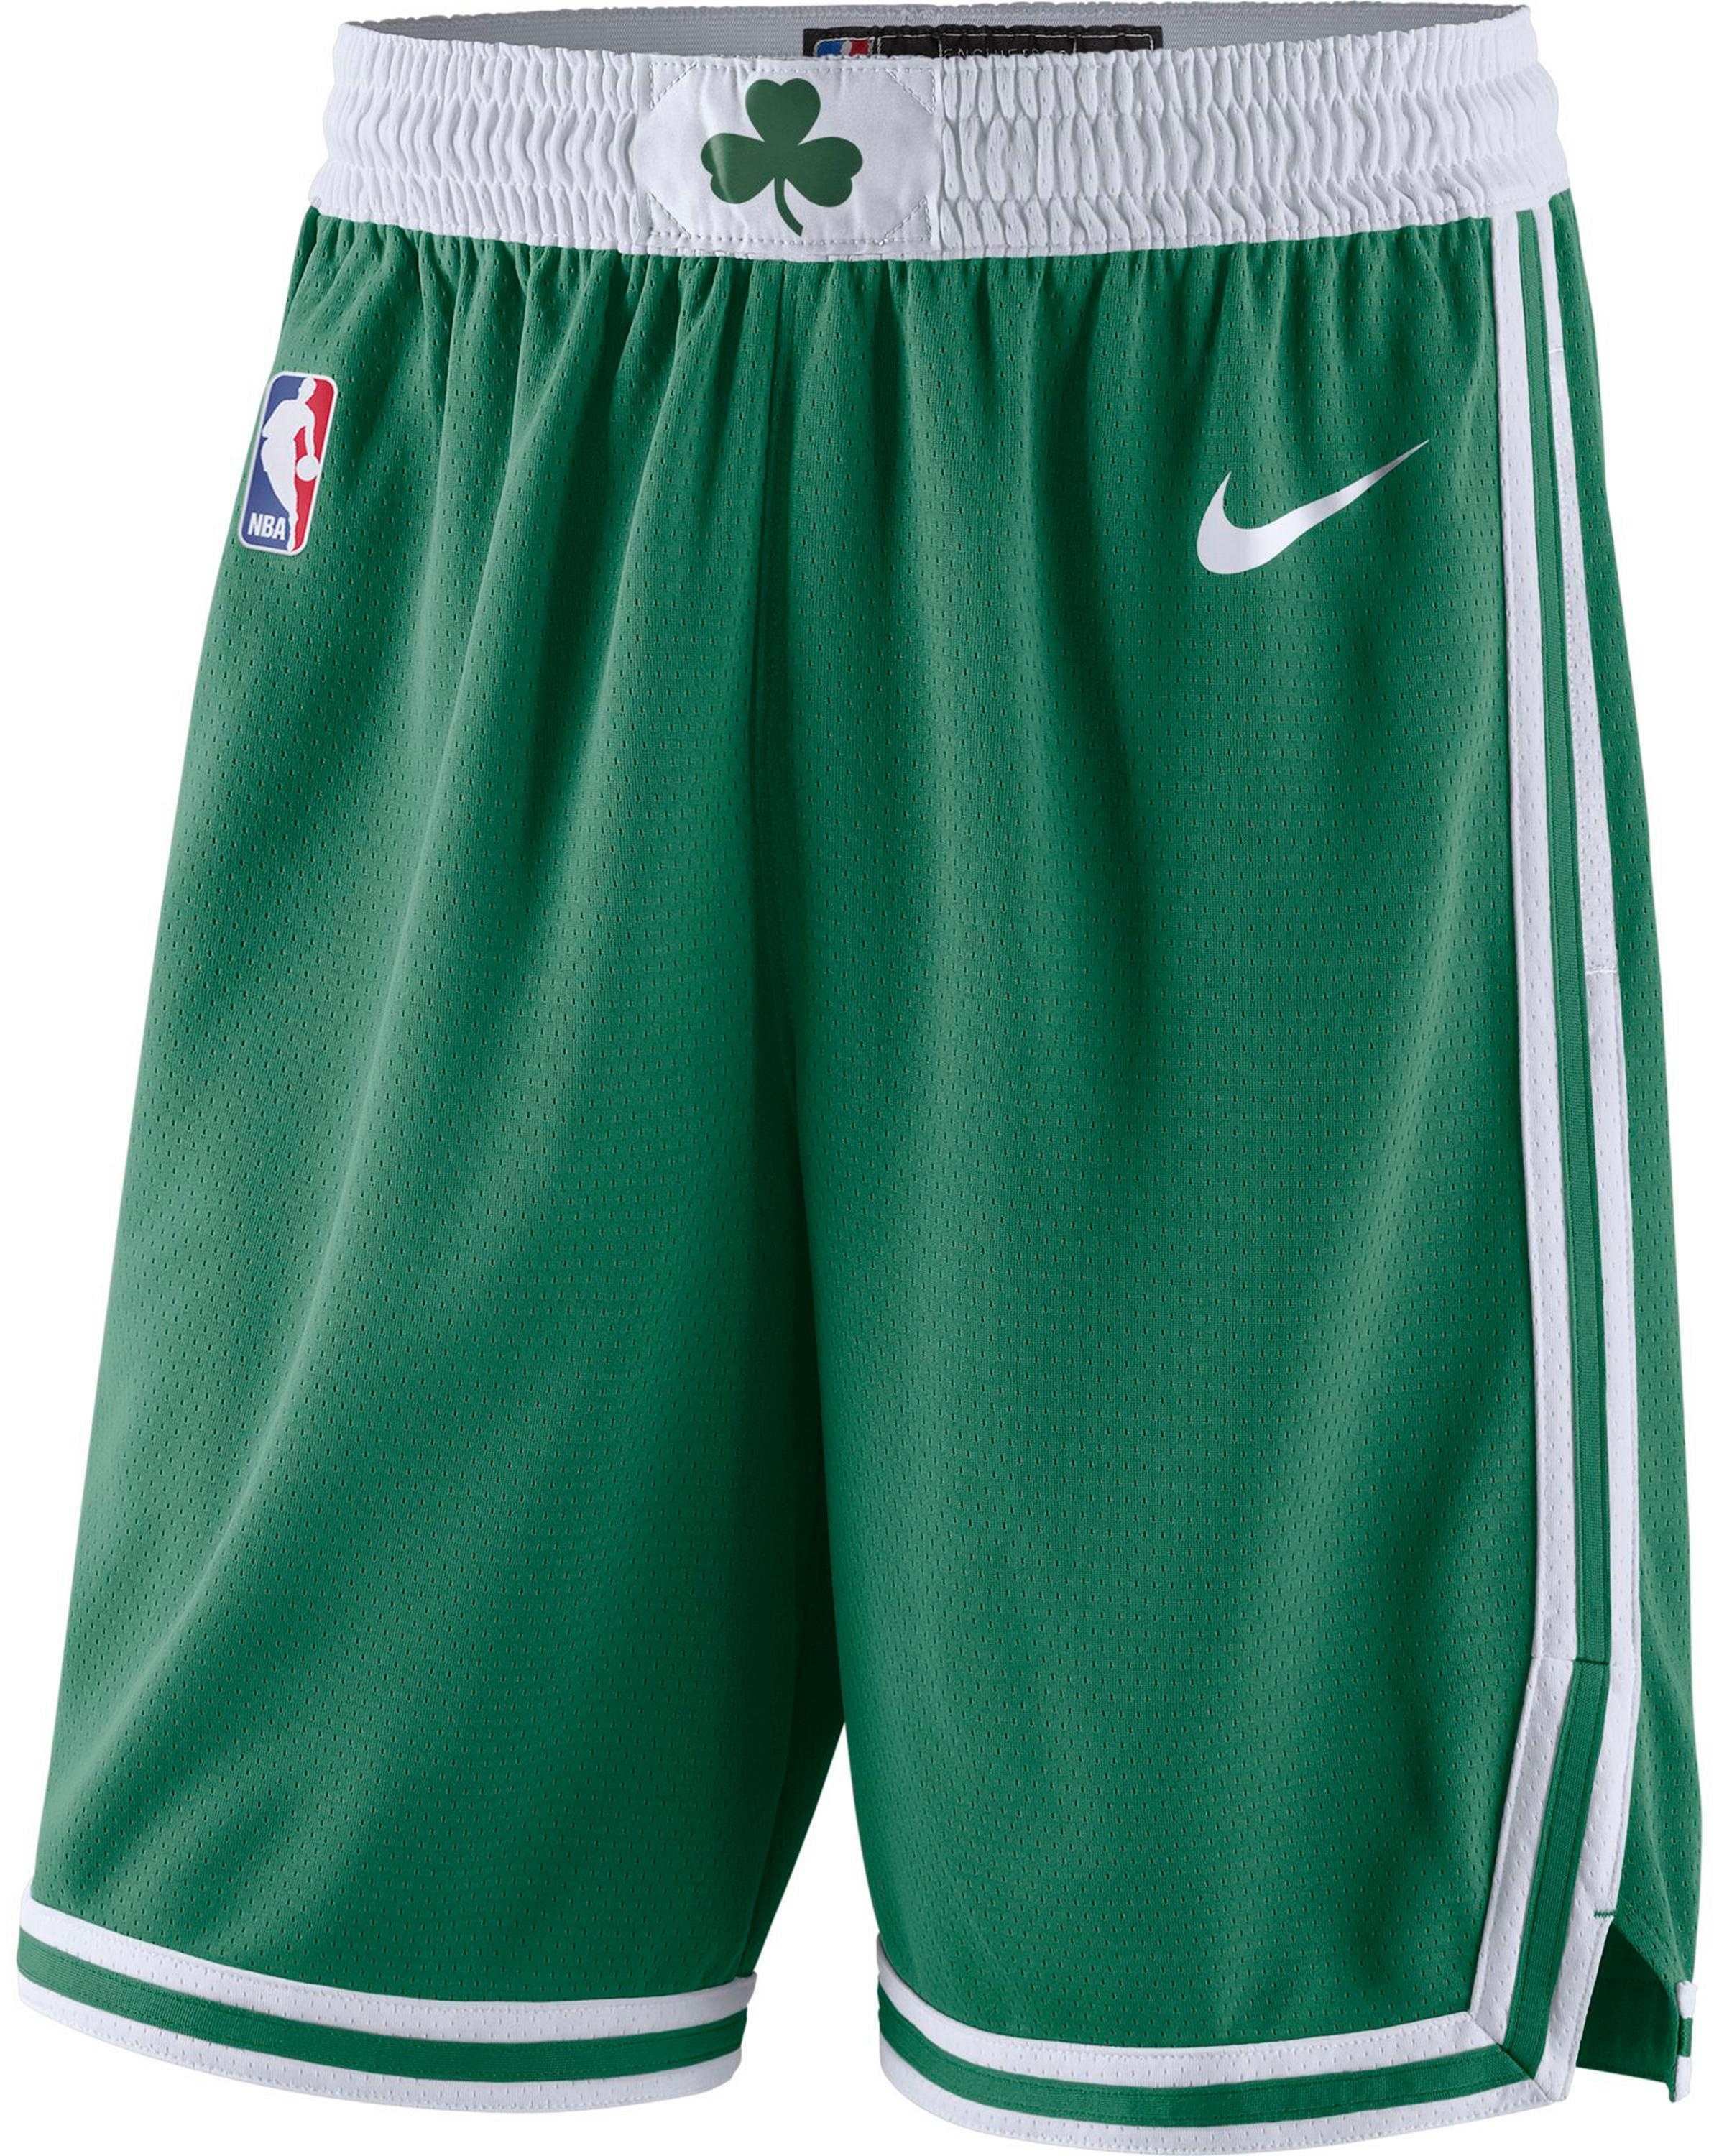 Nike Boston Celtics Basketball-Shorts Herren in clover-white, Größe L - grün